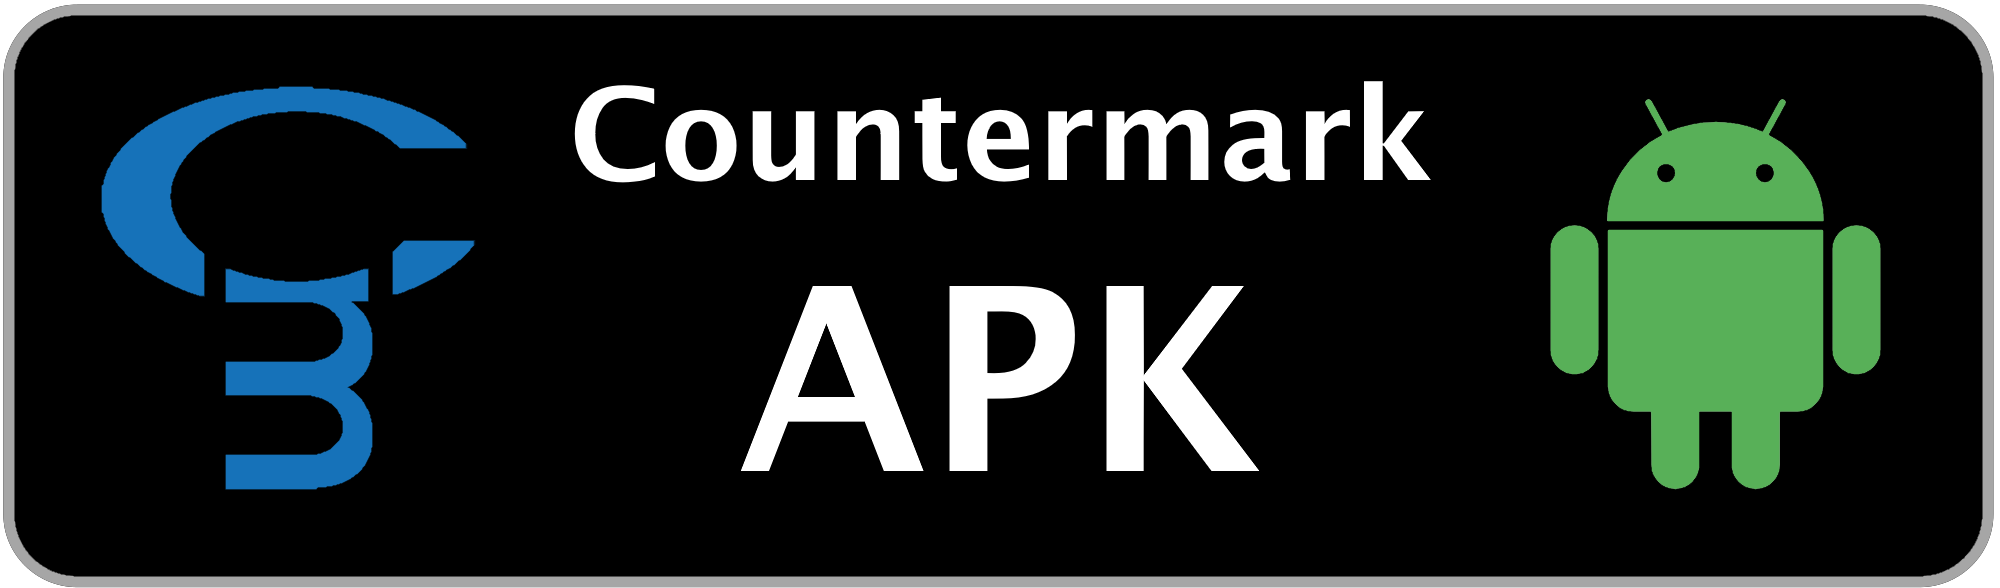 Countermark APK Download